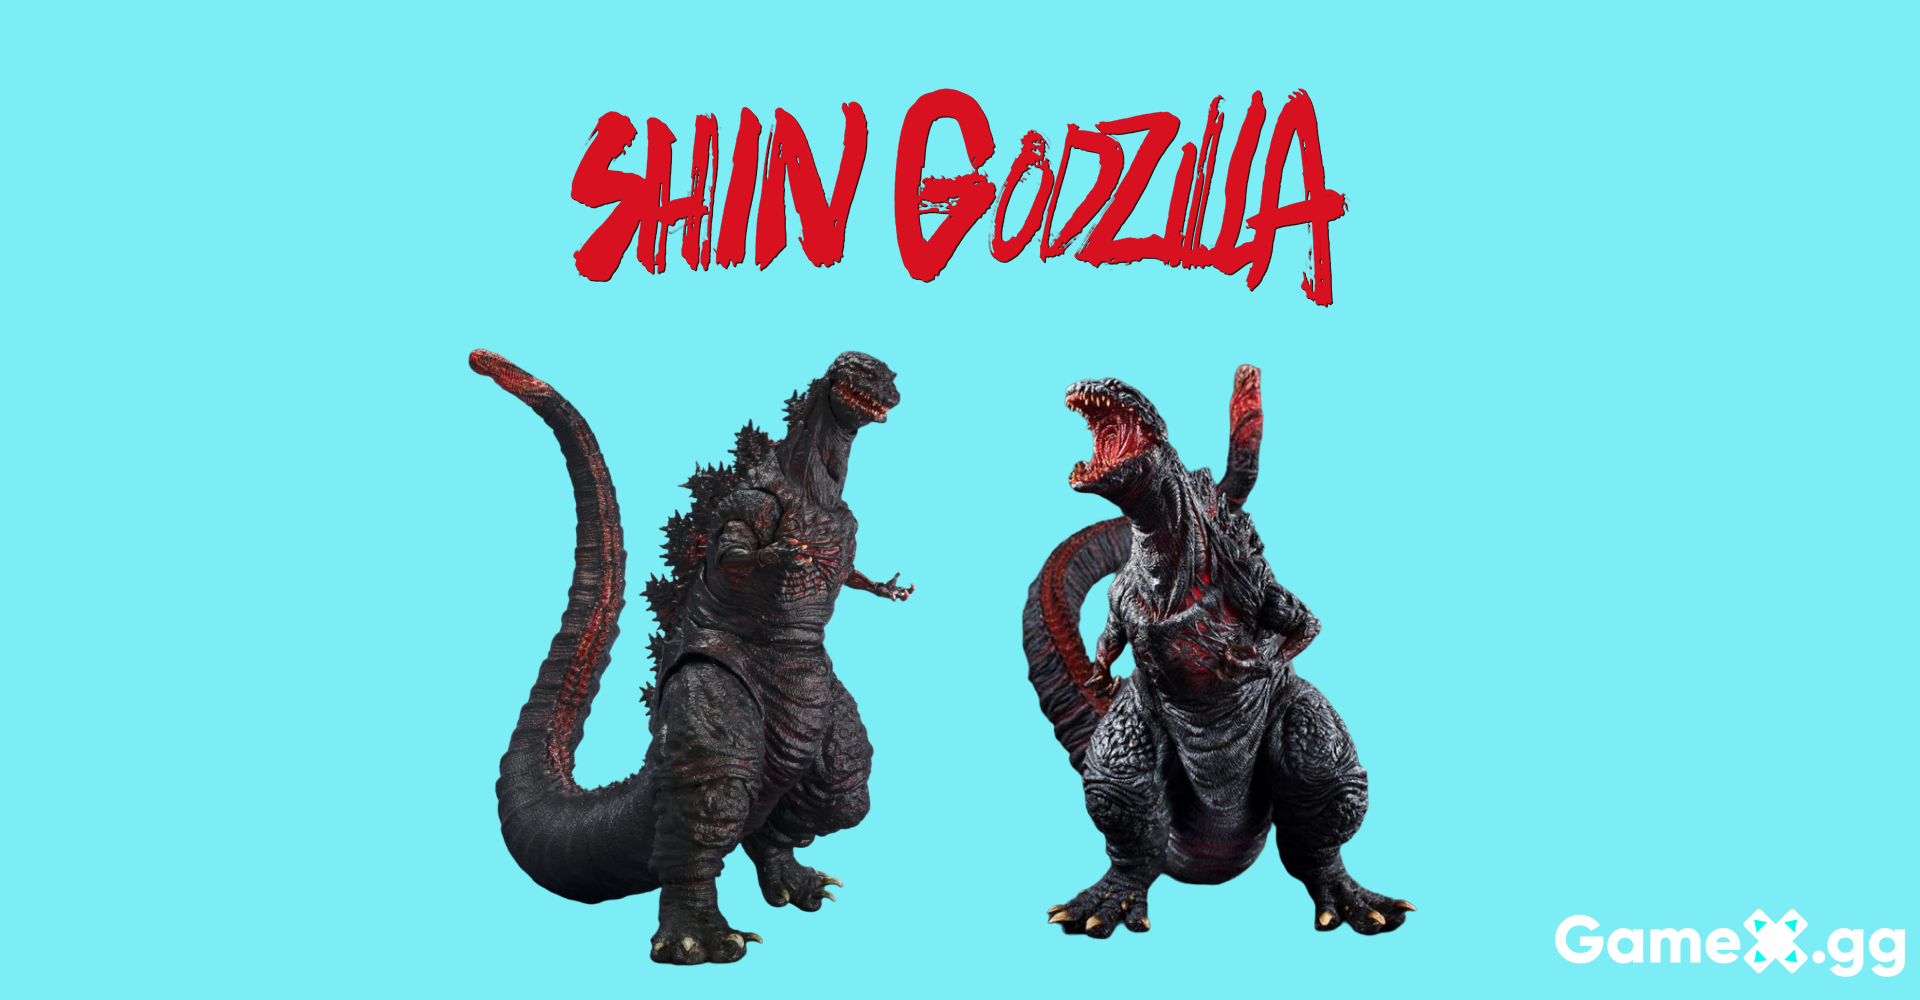 What did you think about Shin Godzilla? - Quora